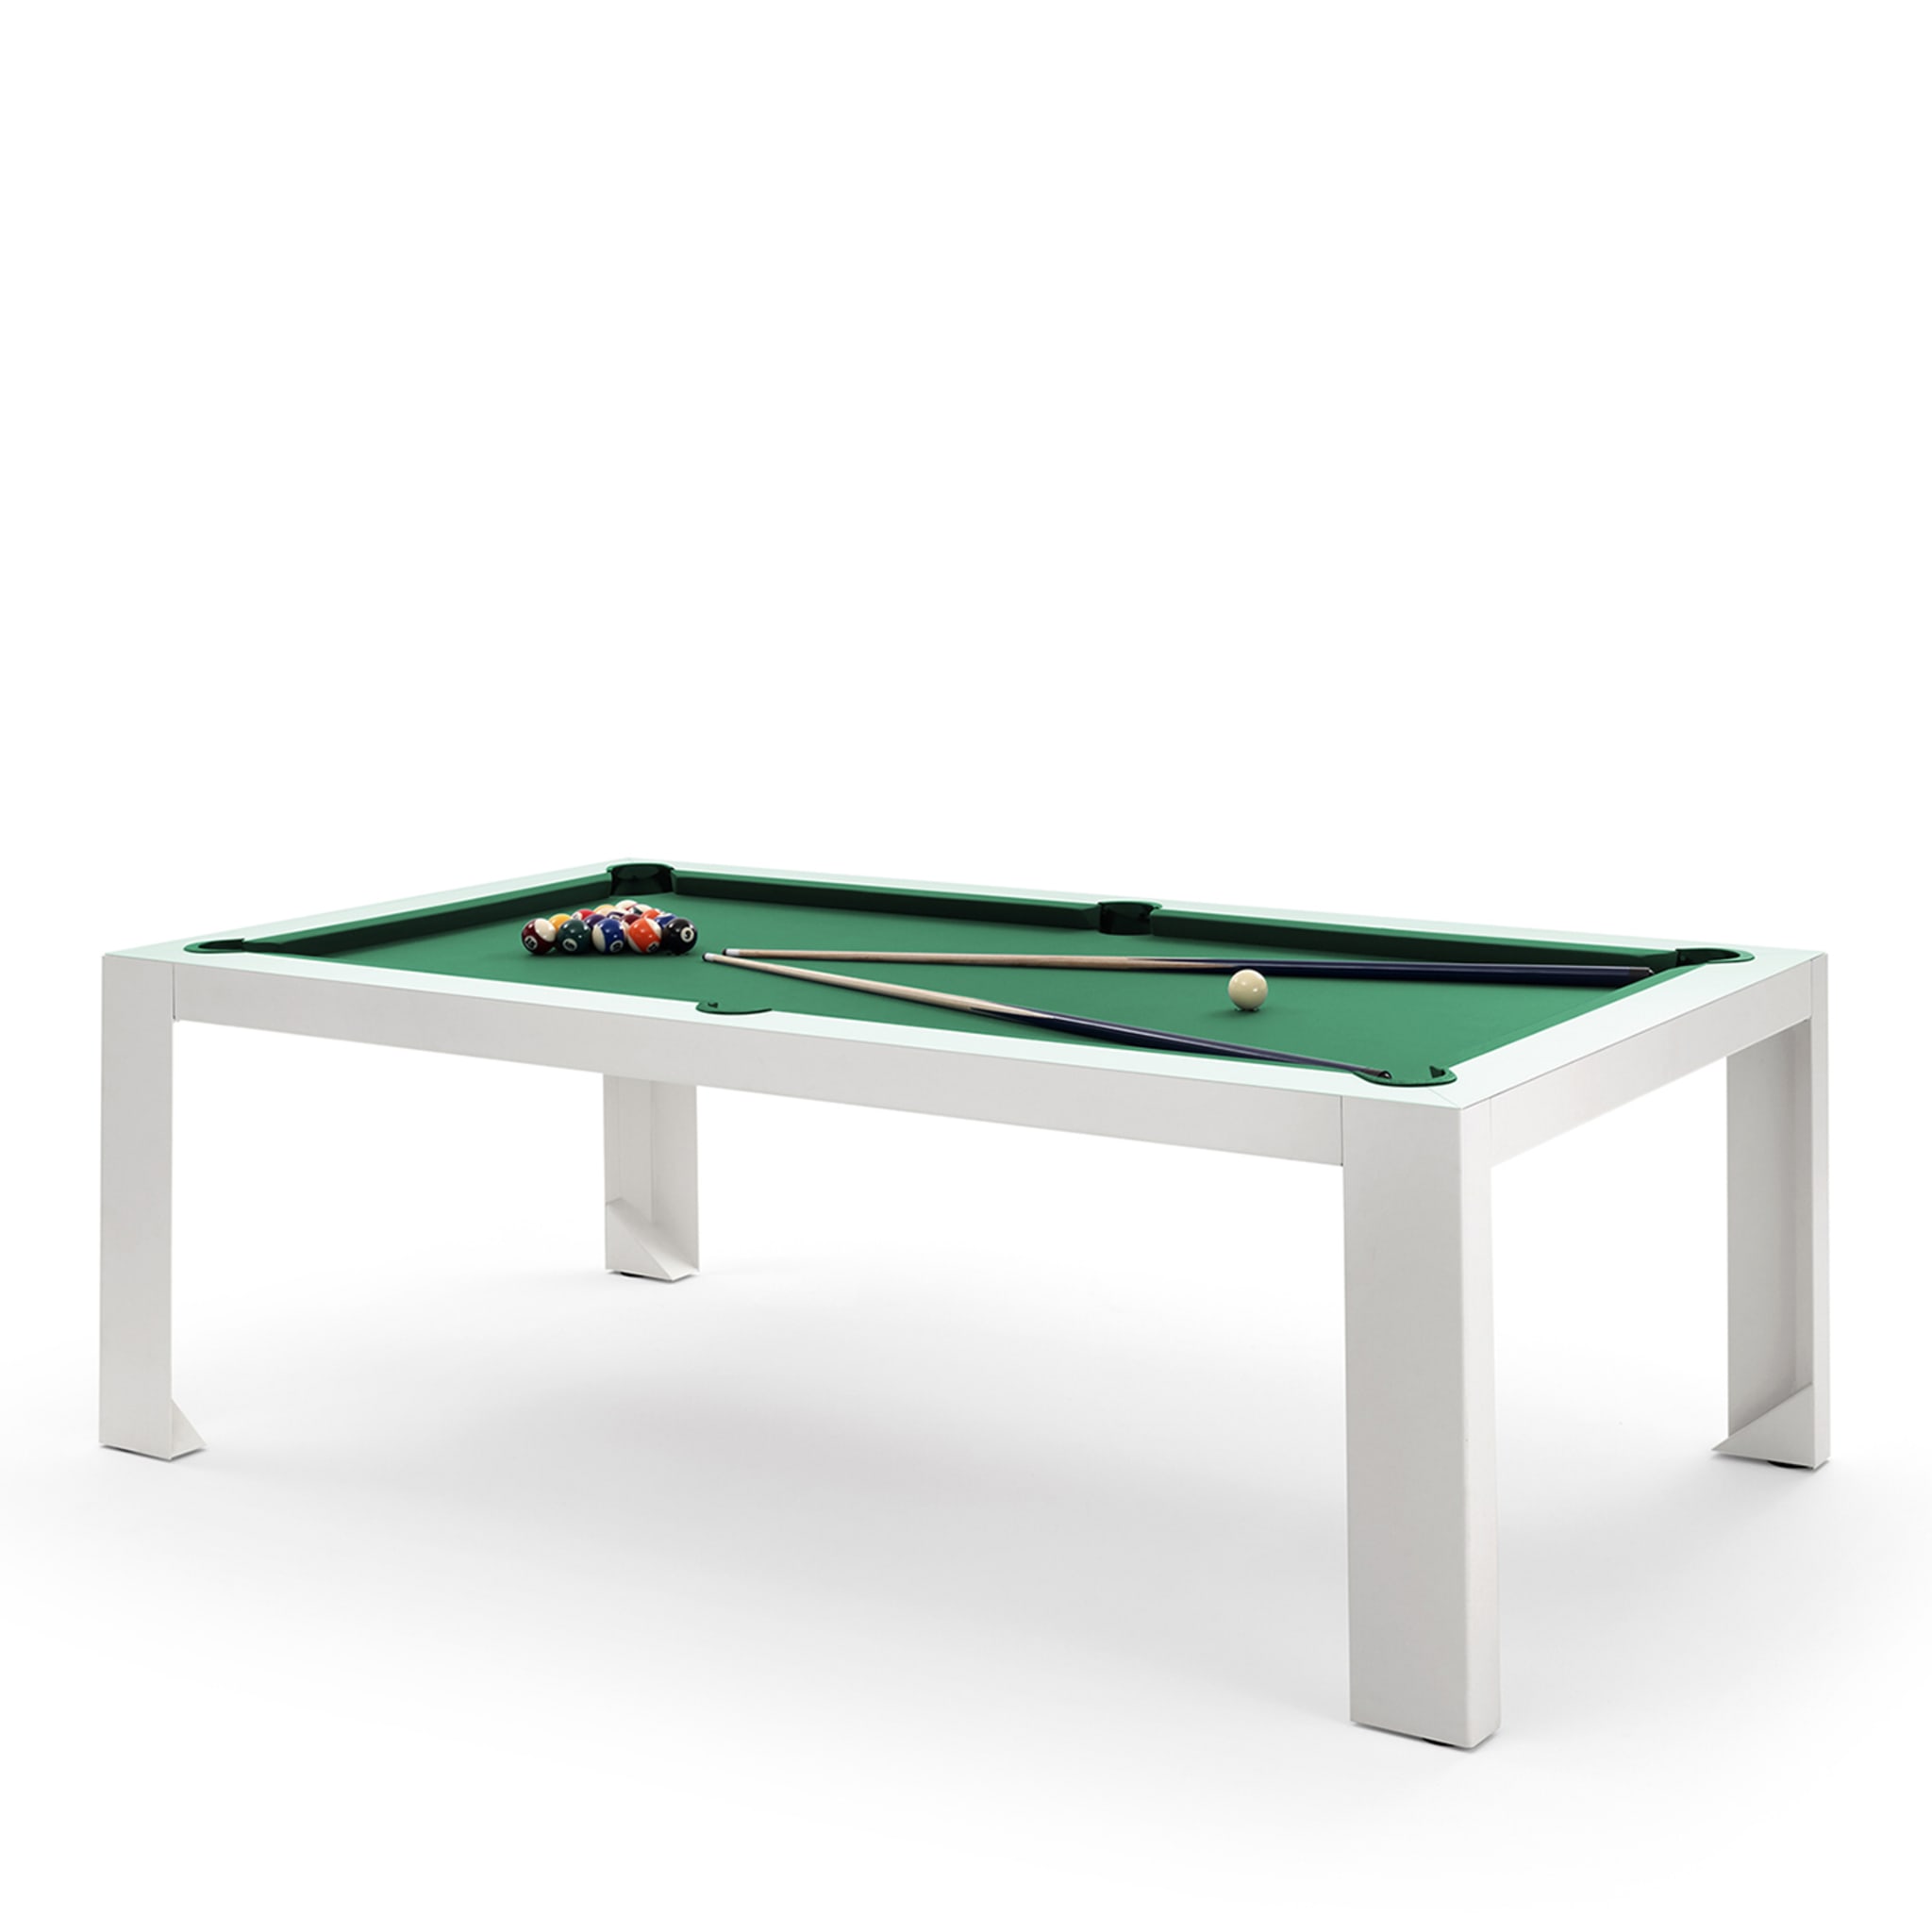 Carambola Cubista 7' White Pool Table by Basaglia + Rota Nodari - Alternative view 1